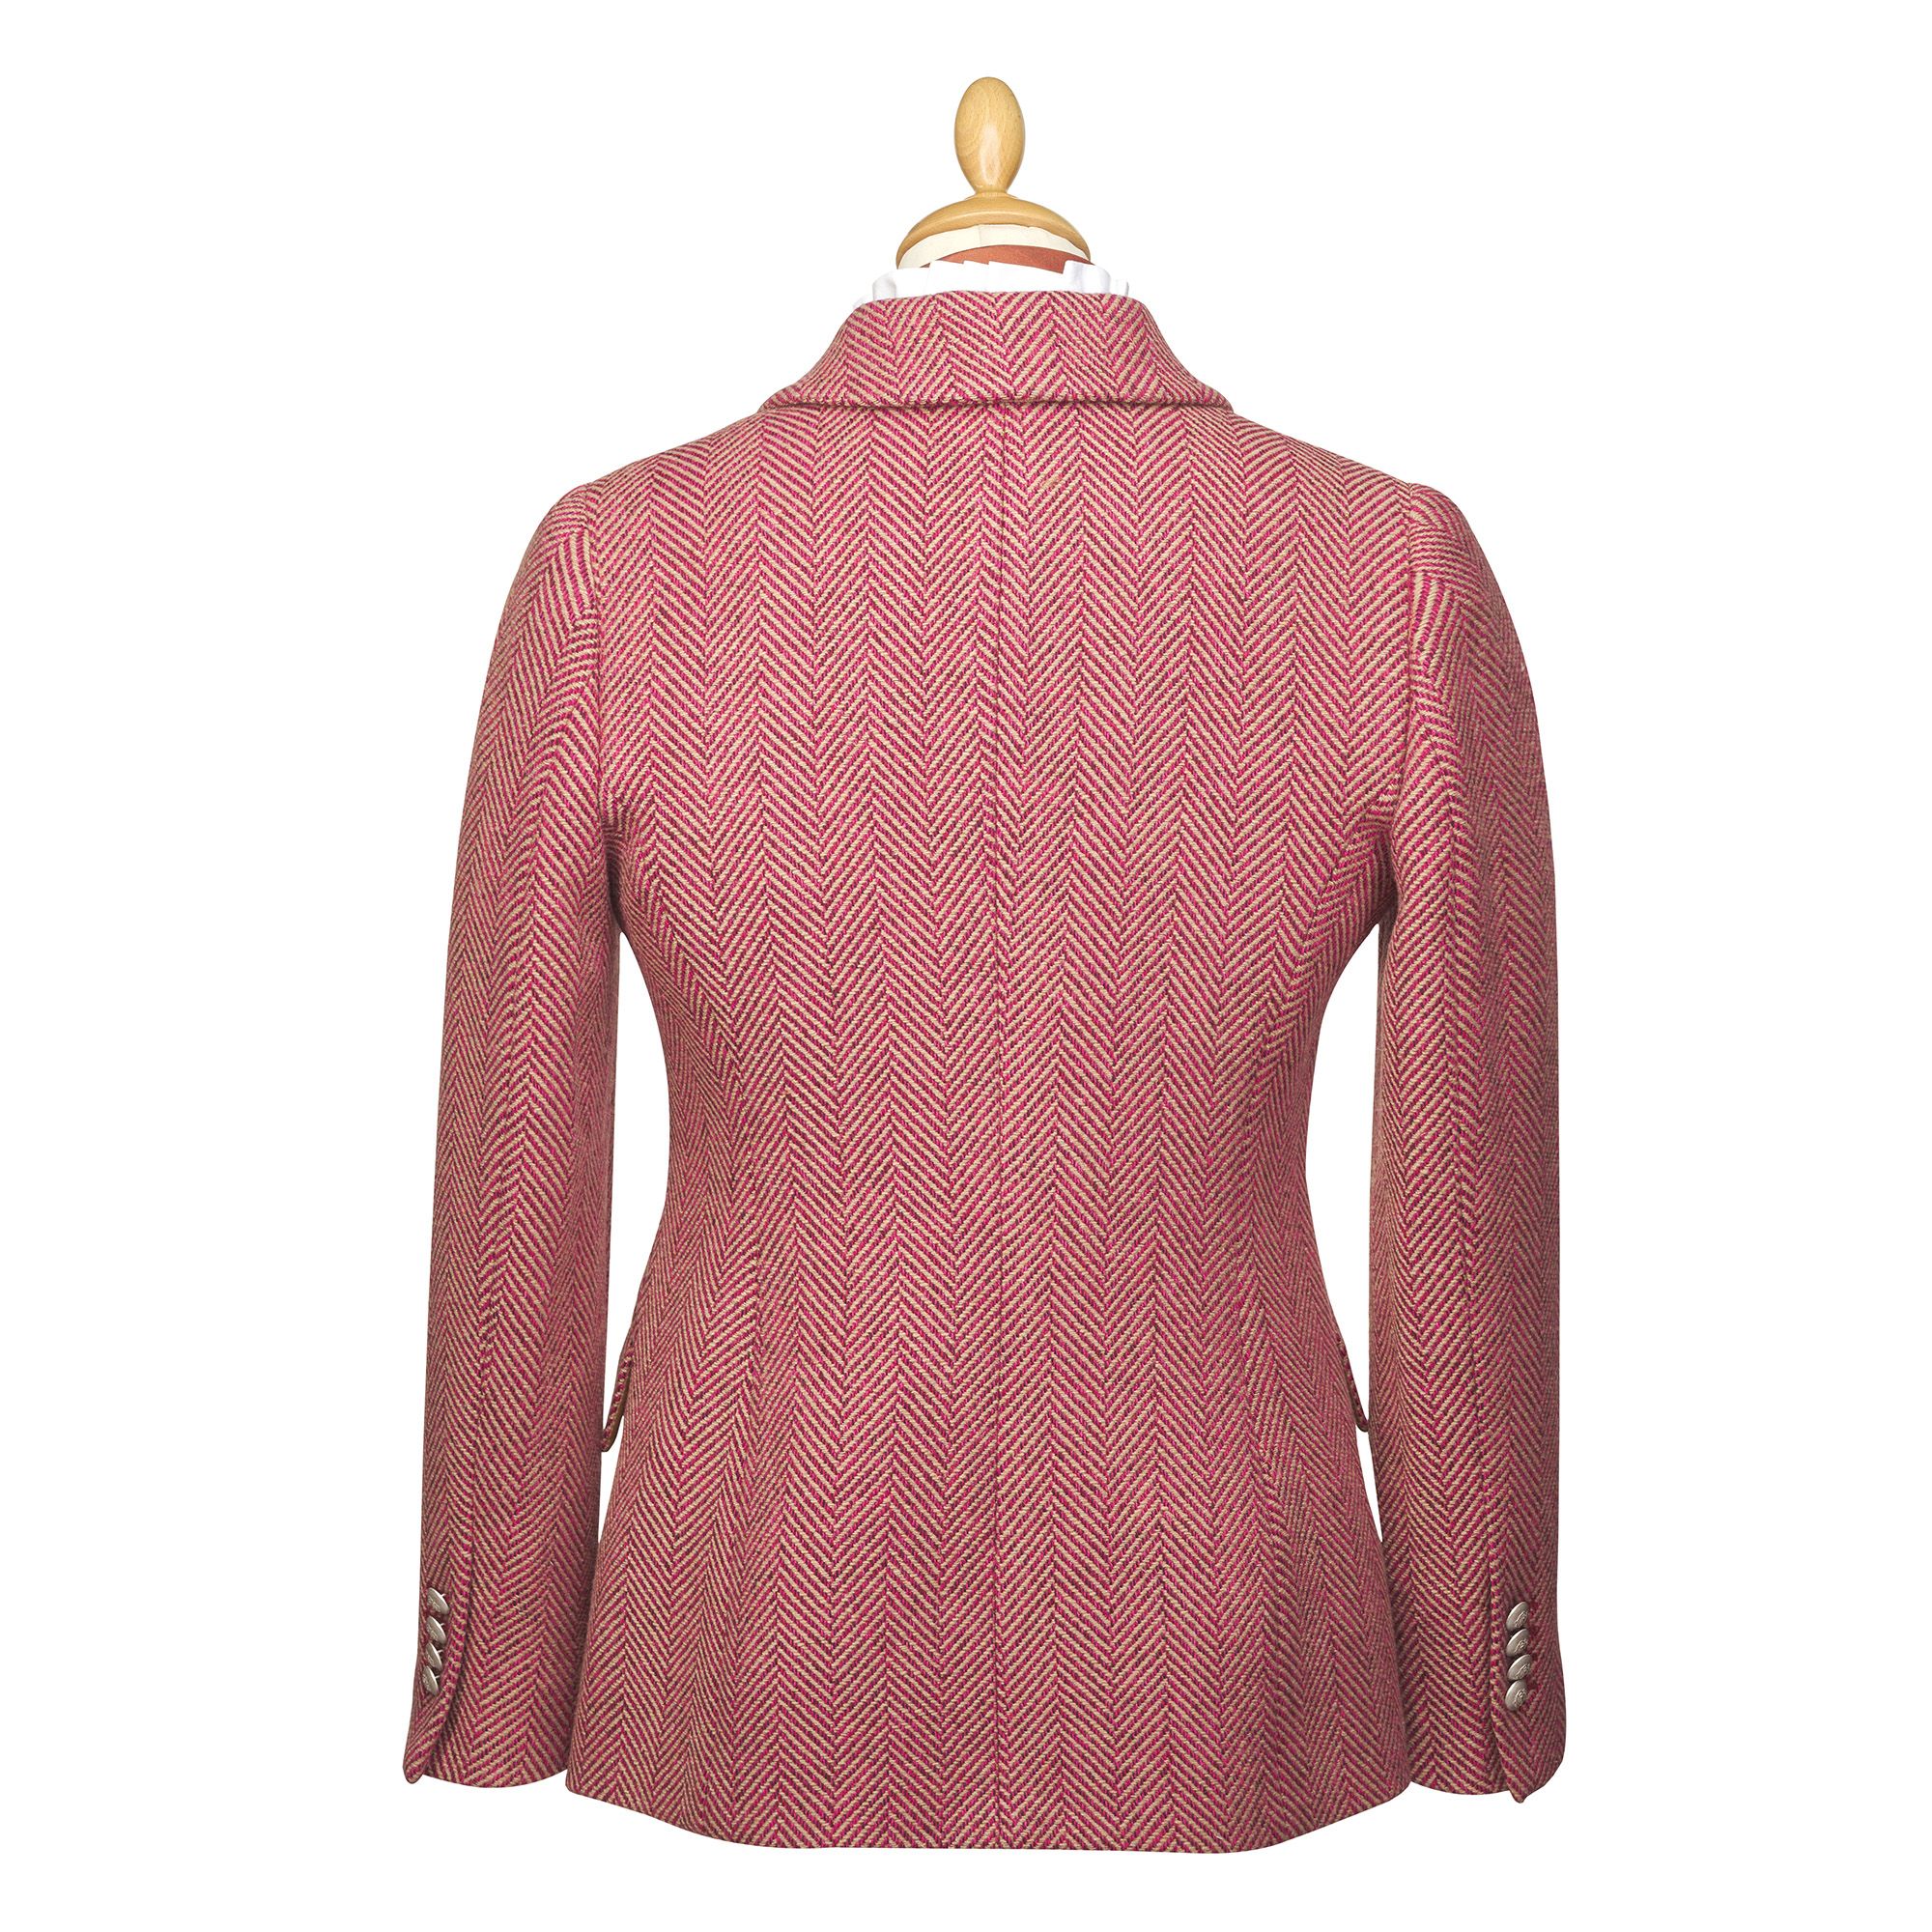 Pink Double Breasted Herringbone Jacket | Ladies Country Clothing ...